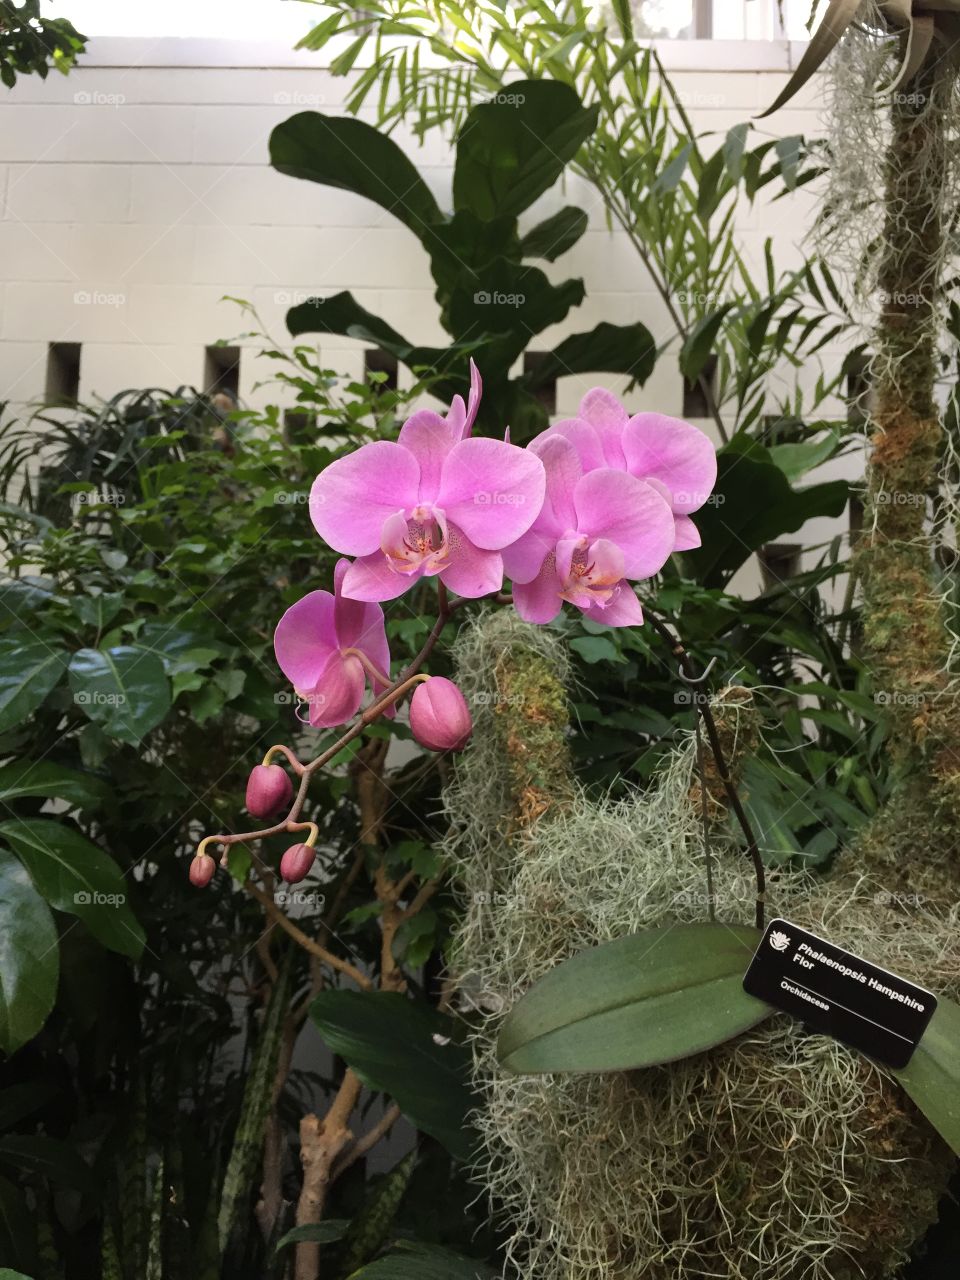 Orchid show @ Missouri Botanical Garden